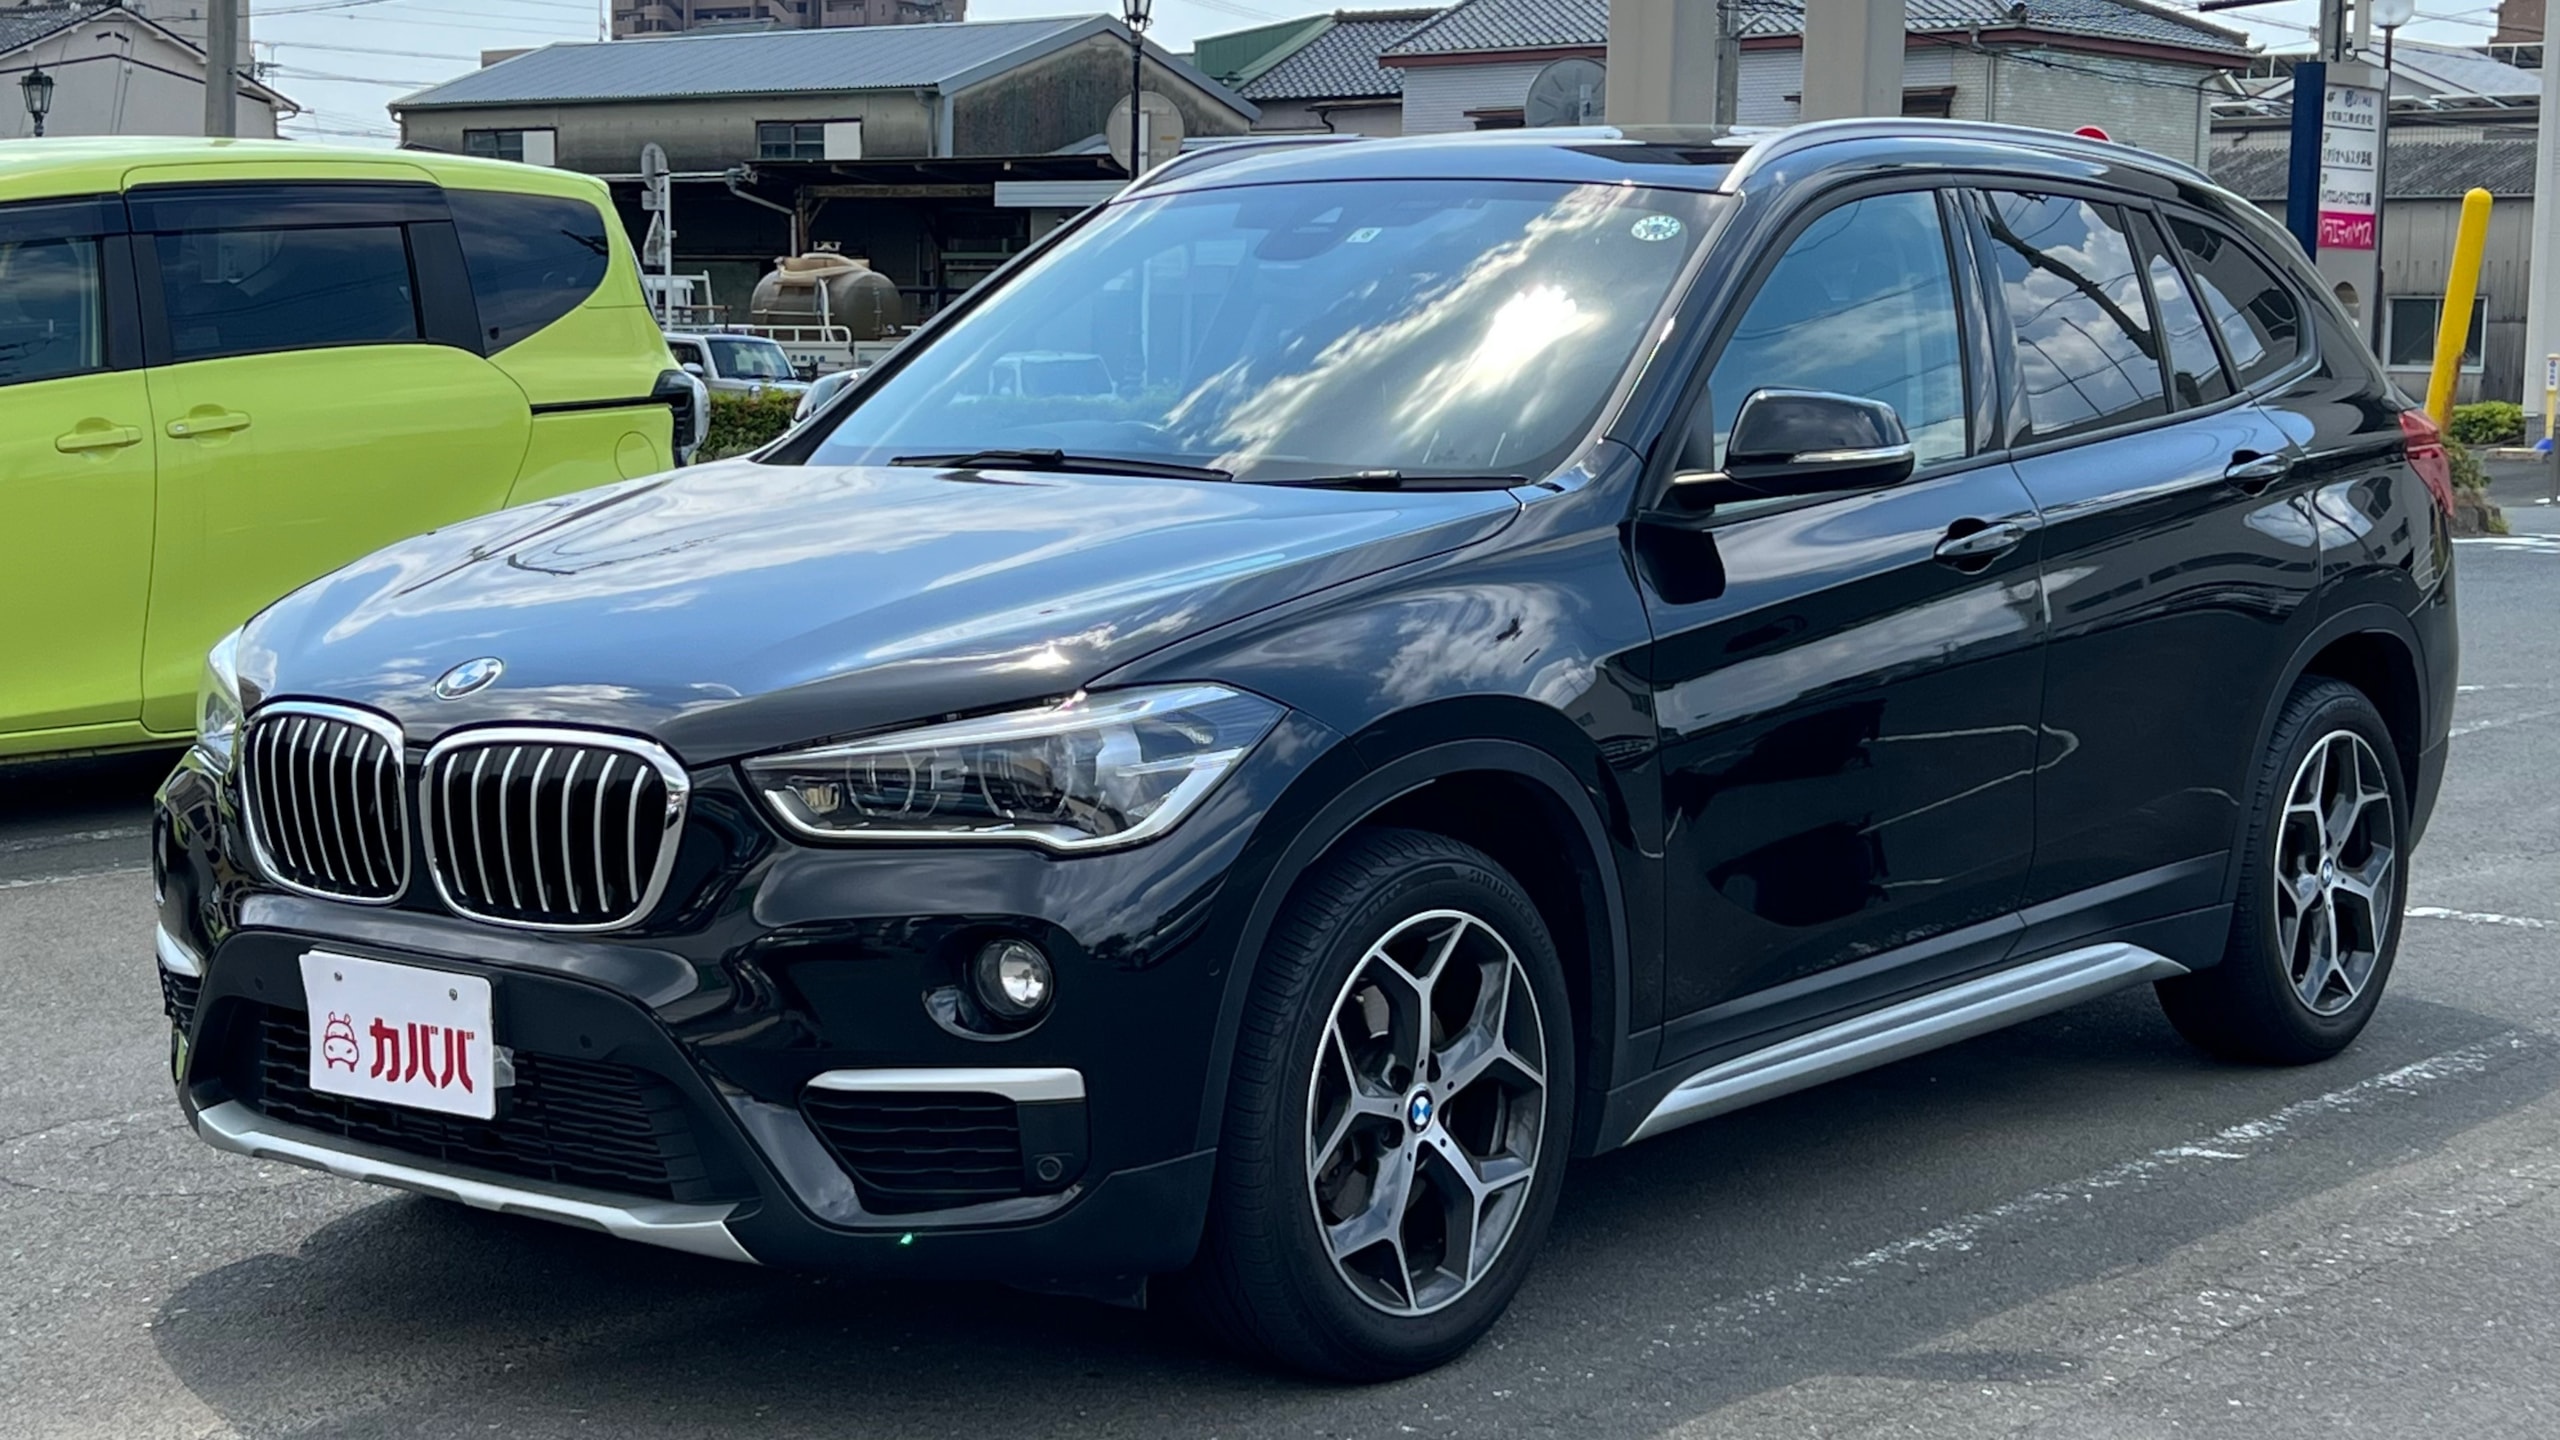 X1 xDrive 18d xLine(BMW)2019年式 250万円の中古車 - 自動車フリマ(車 ...